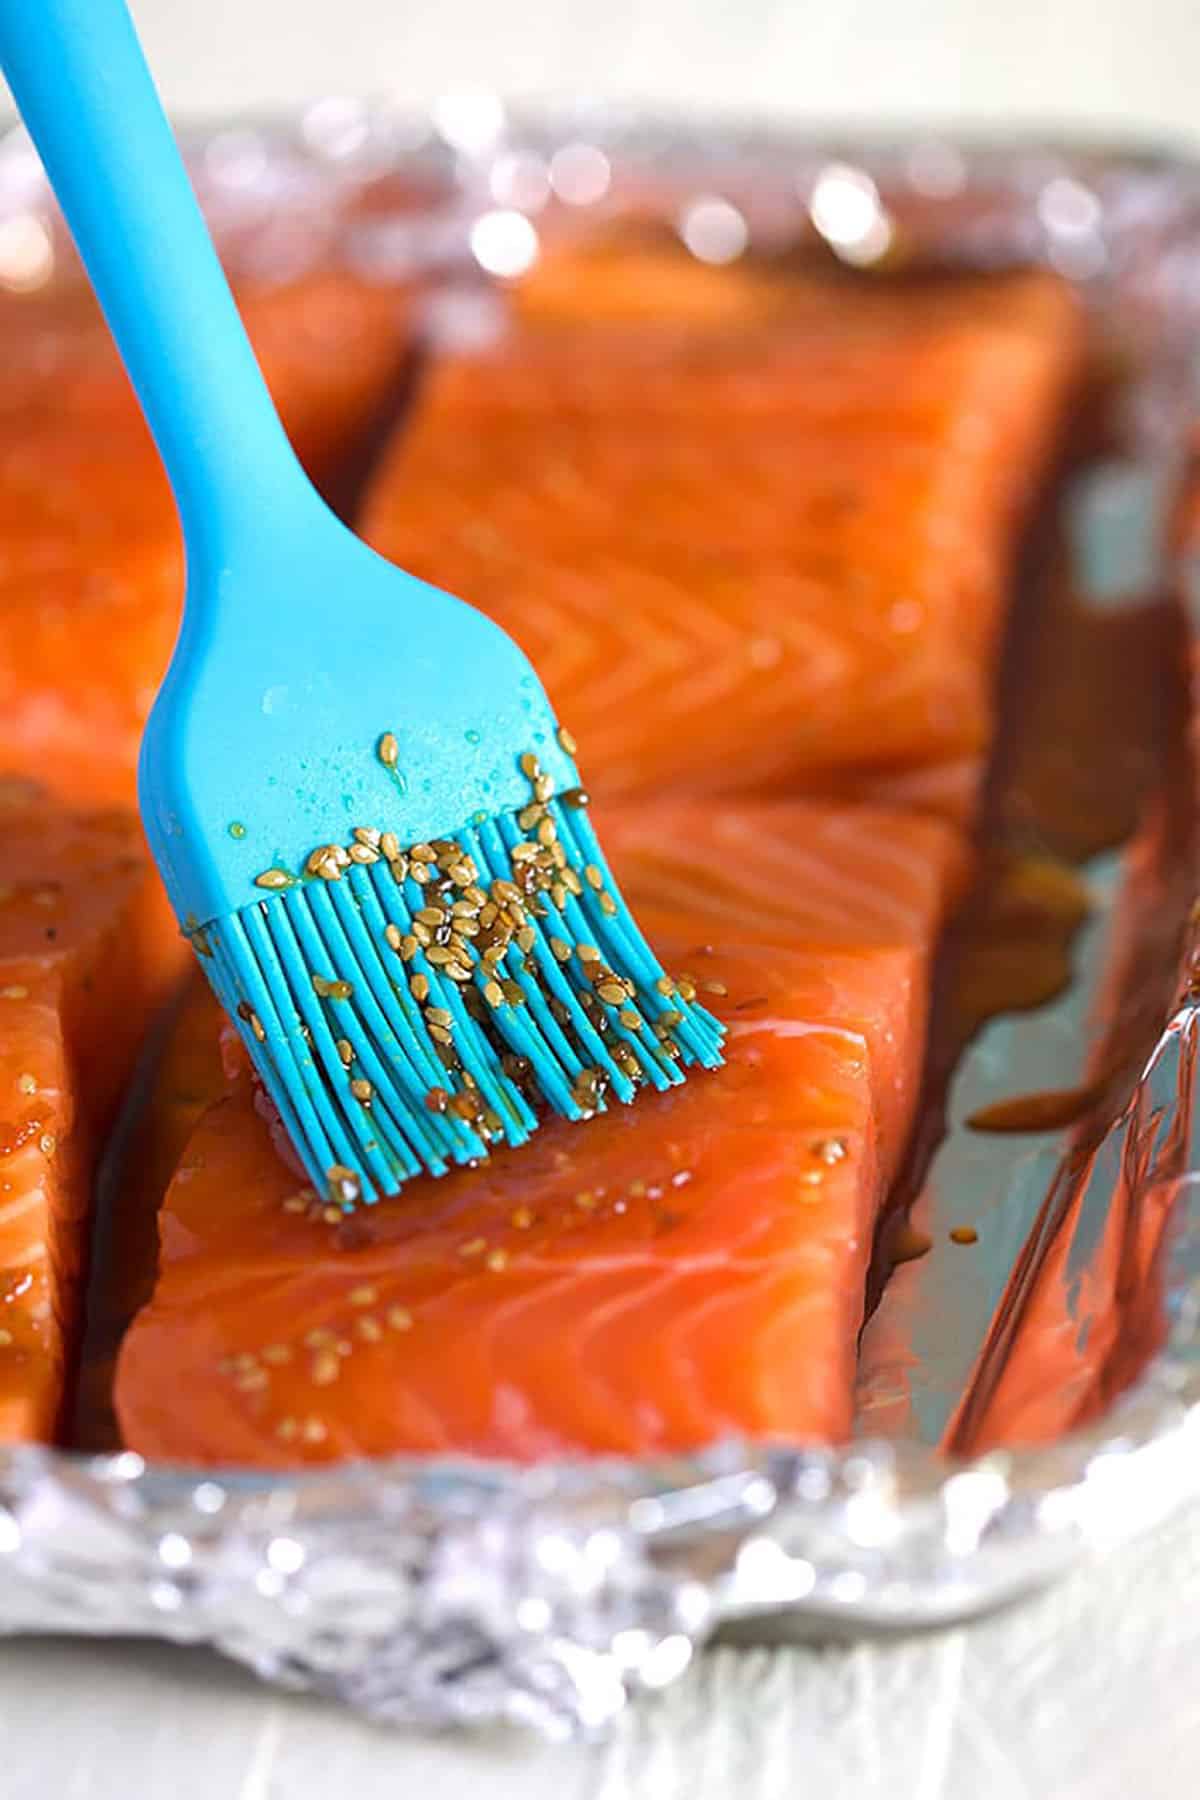 Blue basting brush applying teriyaki sauce to salmon filets on a baking sheet.